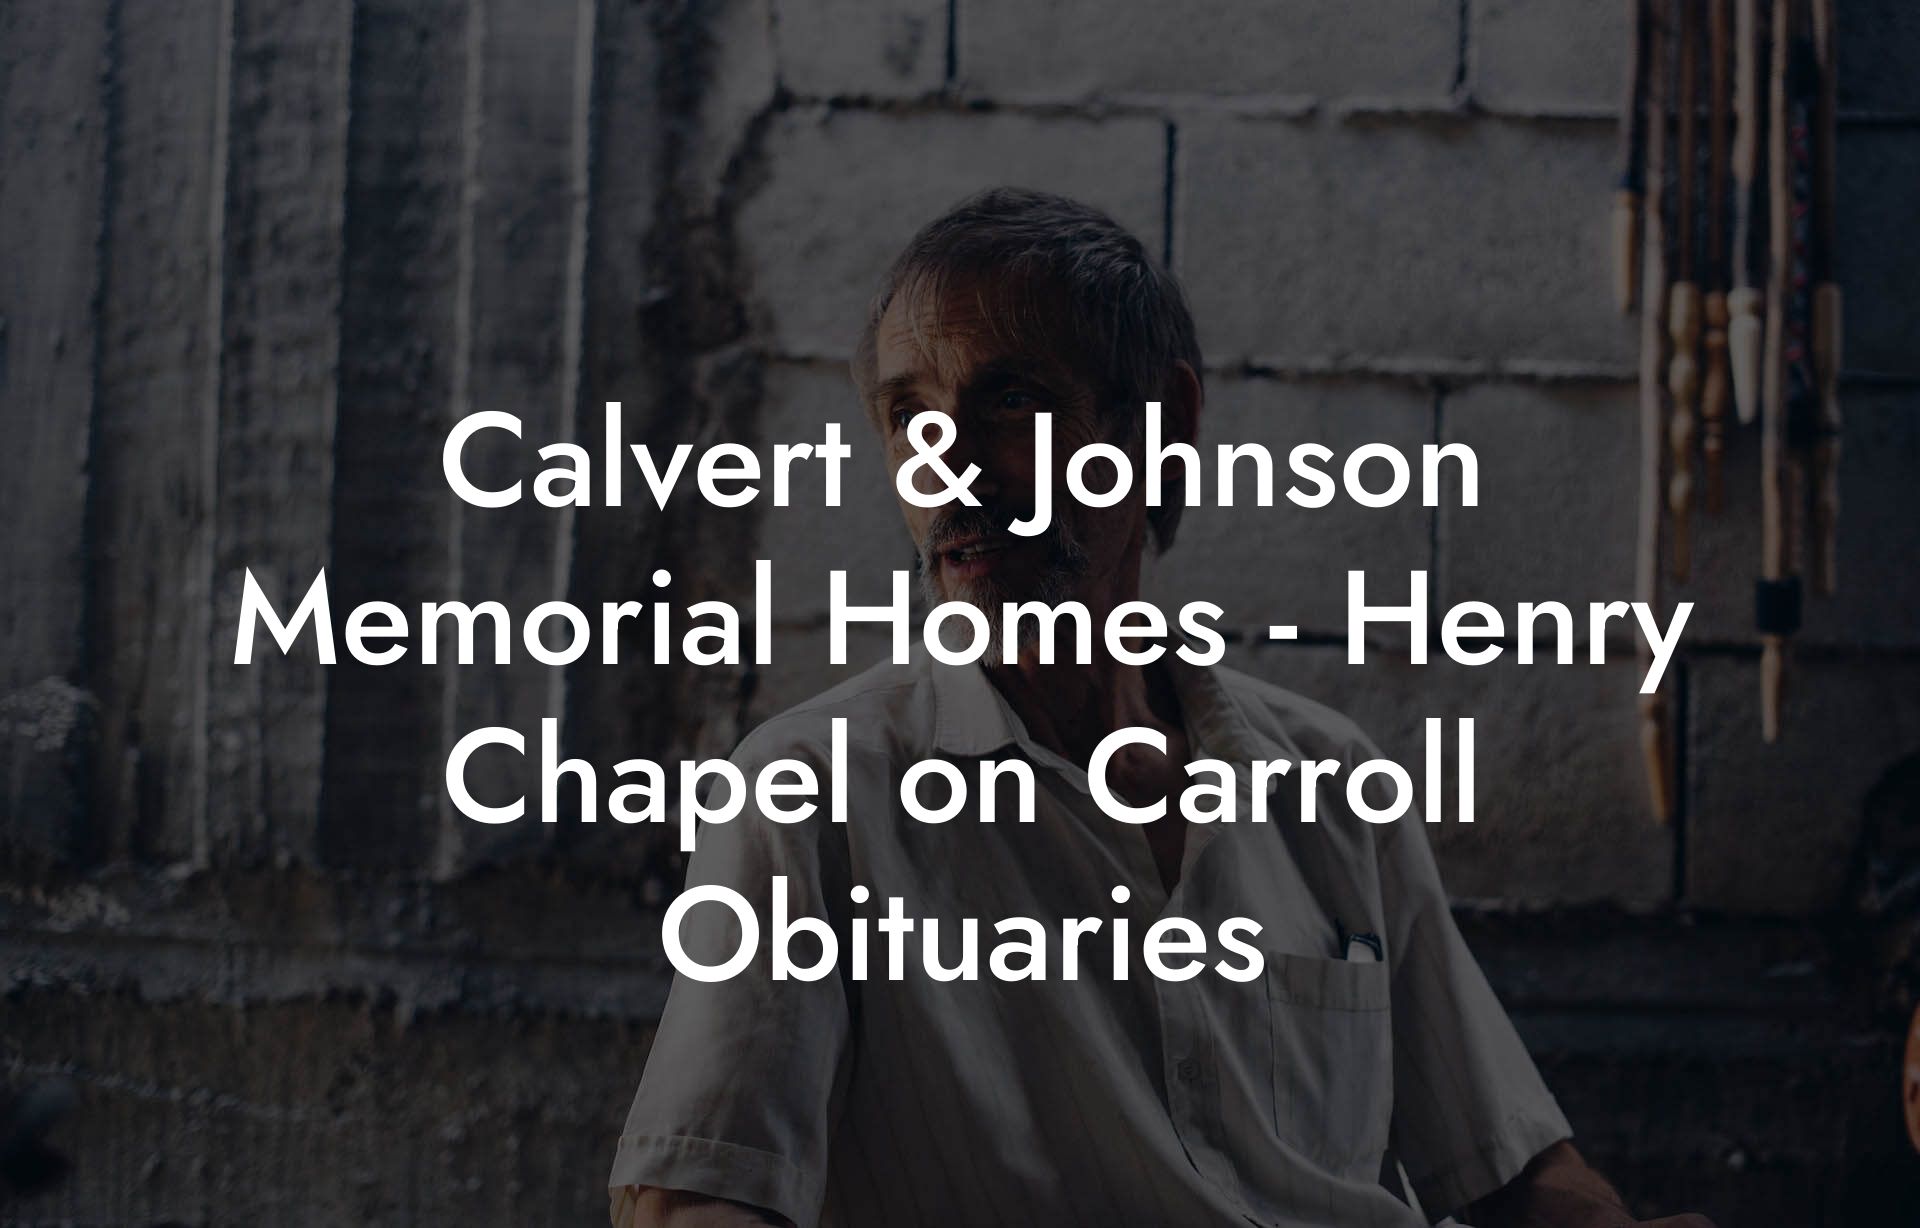 Calvert & Johnson Memorial Homes - Henry Chapel on Carroll Obituaries